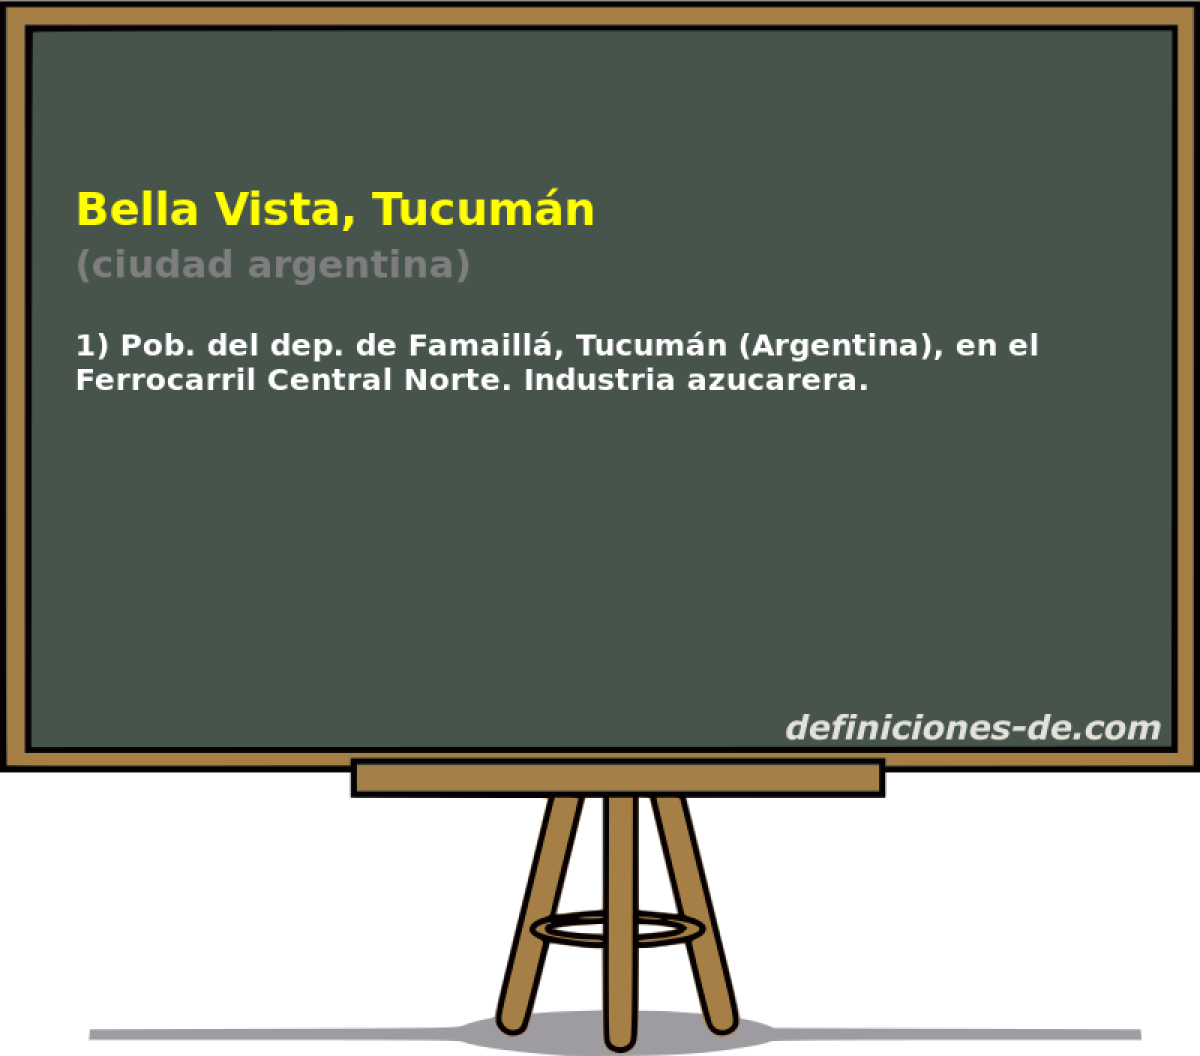 Bella Vista, Tucumn (ciudad argentina)